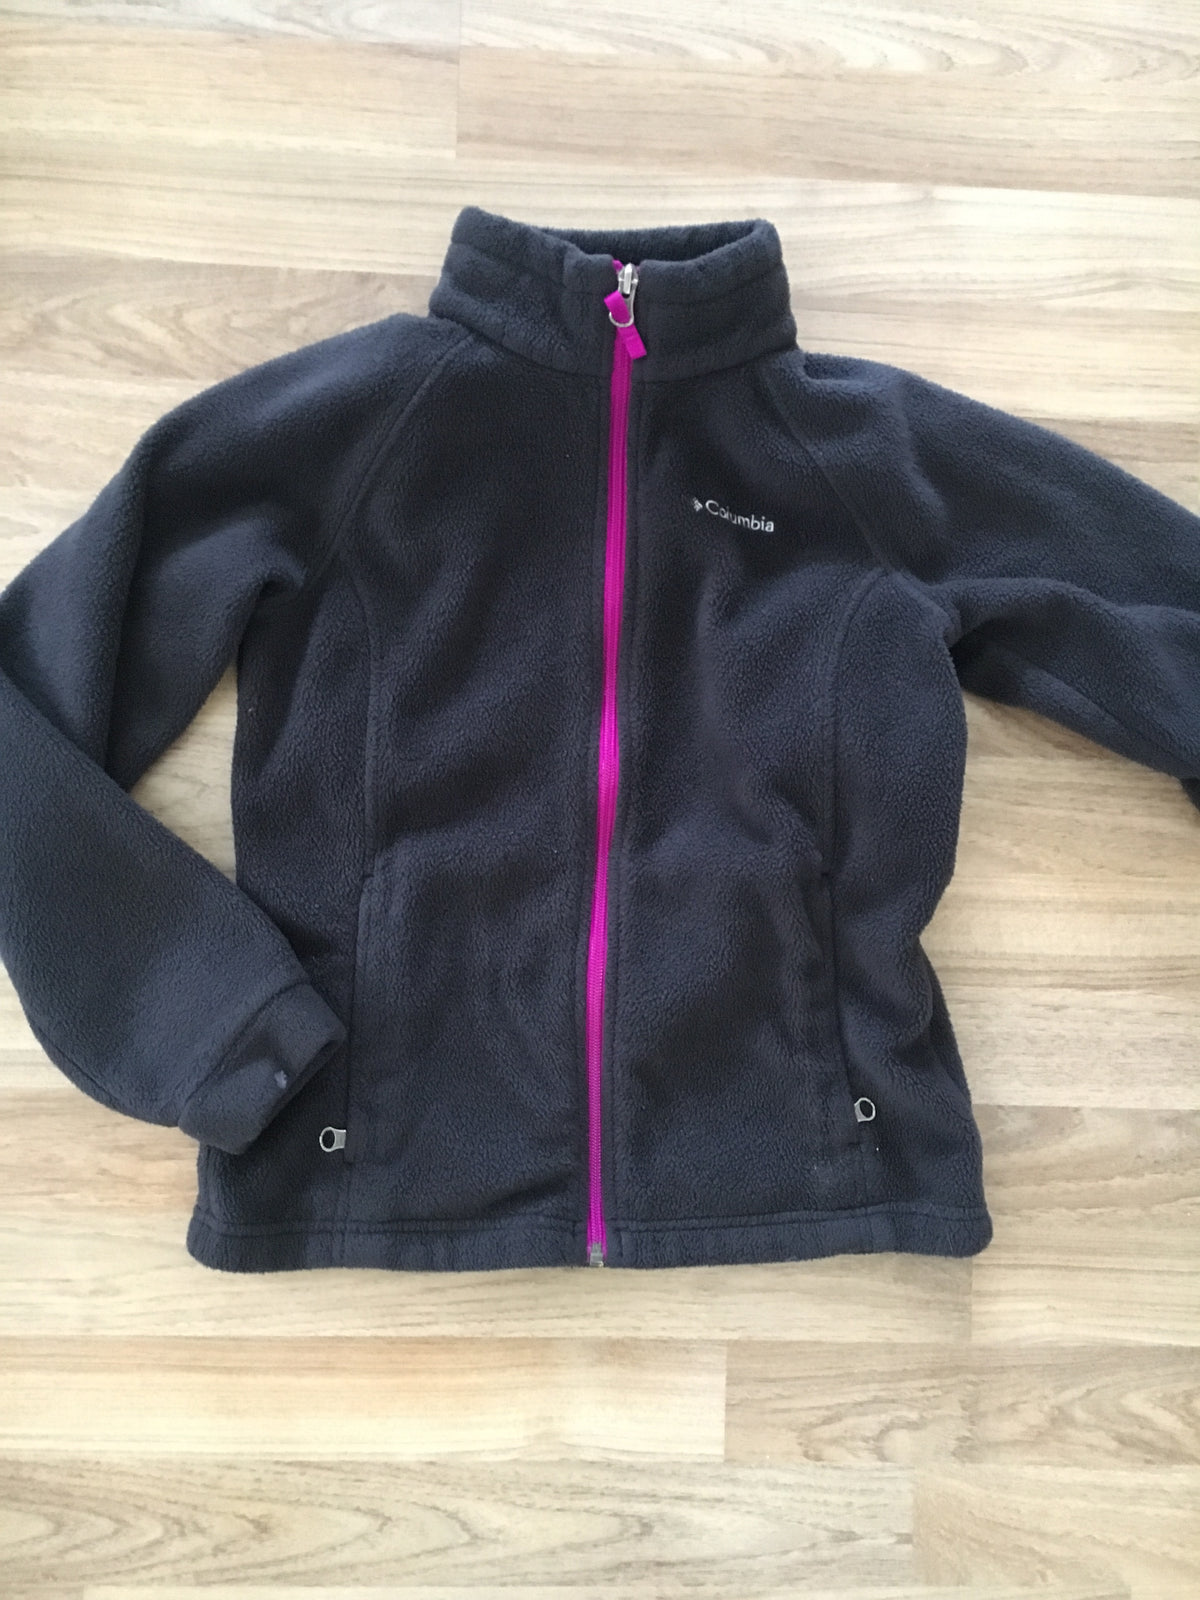 Full-Zip Fleece Jacket (Girls Size 10-12)